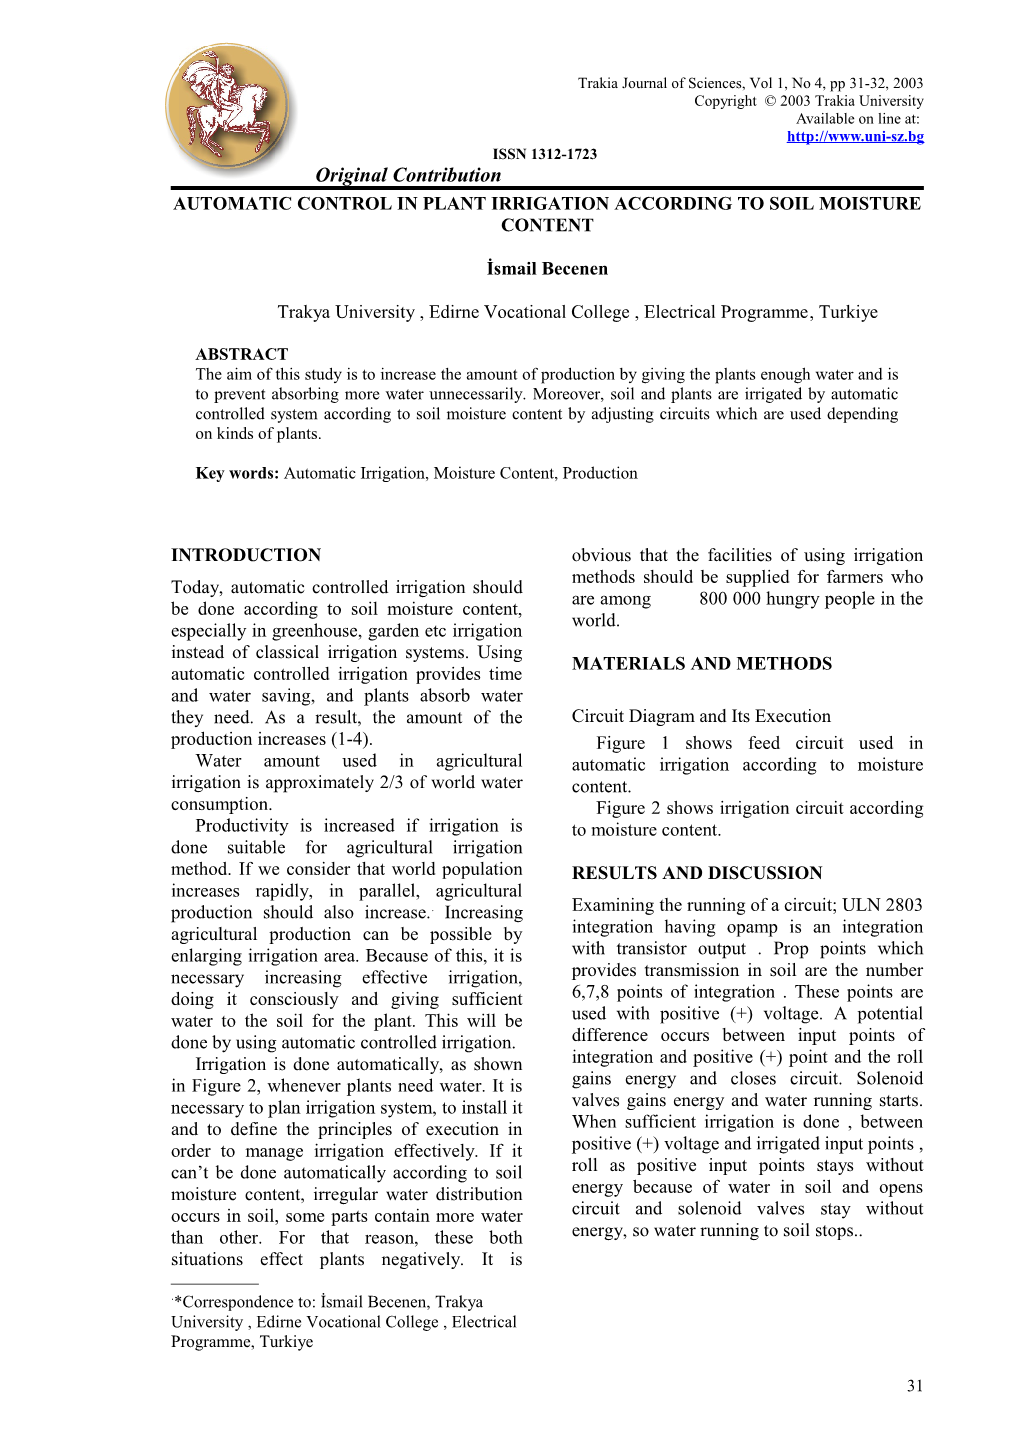 Trakia Journal of Sciences, Vol 1, No 4, Pp 31-32, 2003